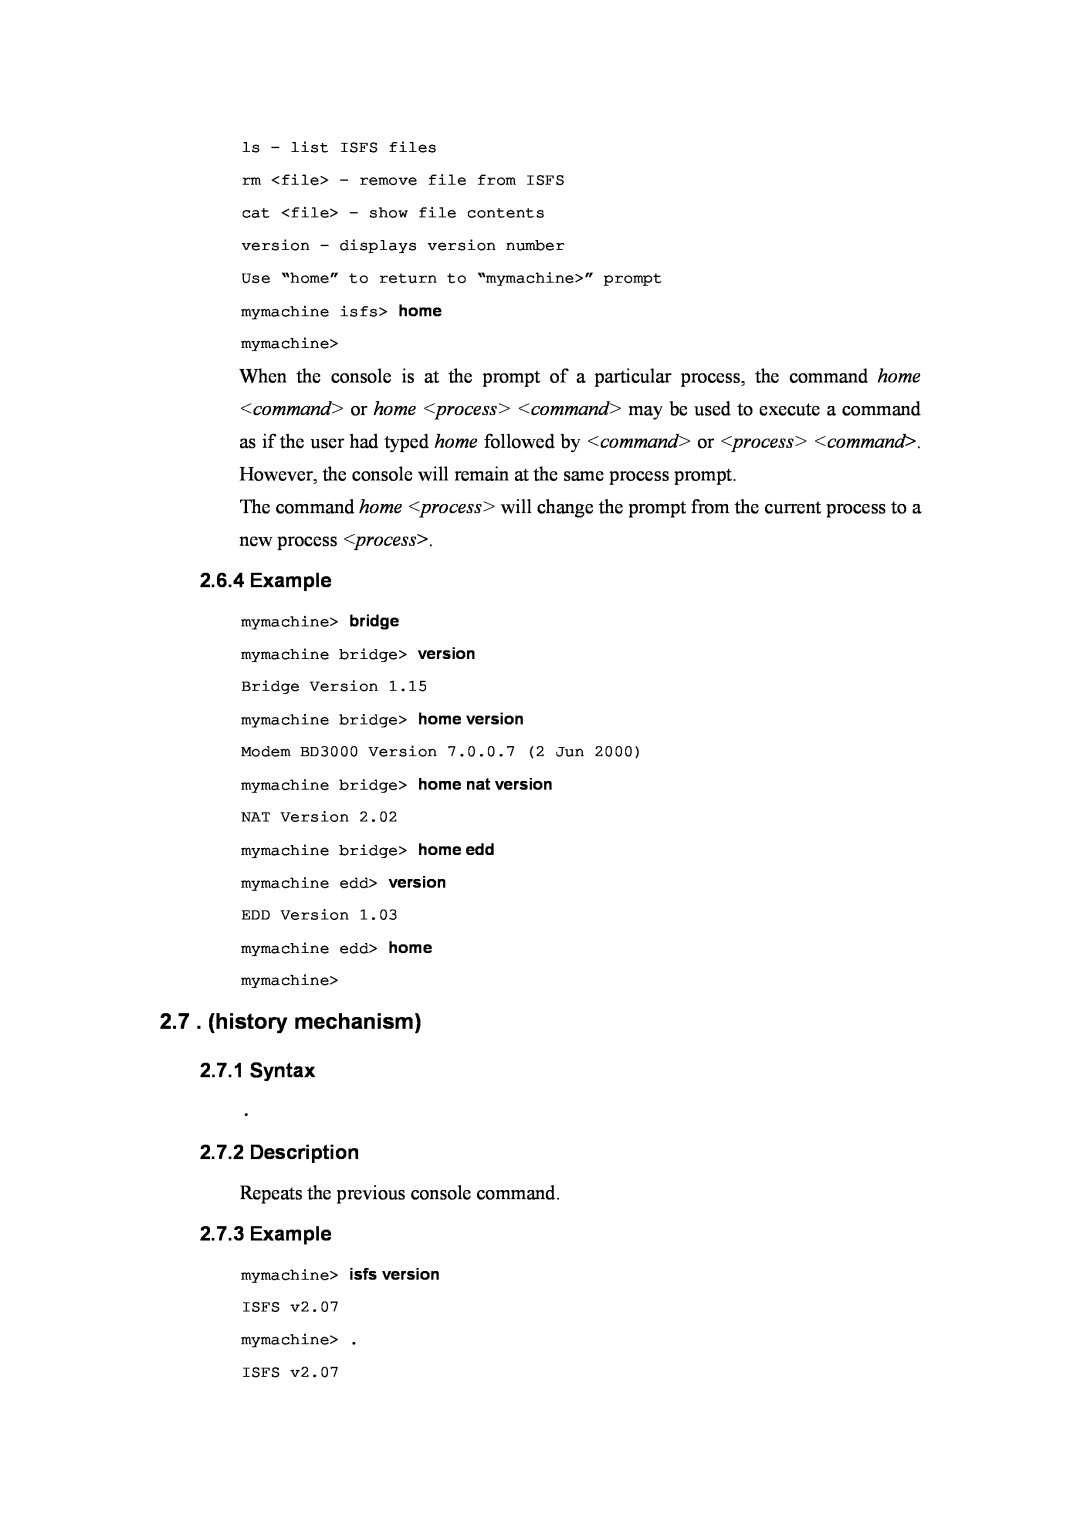 Atlantis Land A02-RA(Atmos)_ME01 manual history mechanism, Example, Syntax, Description 